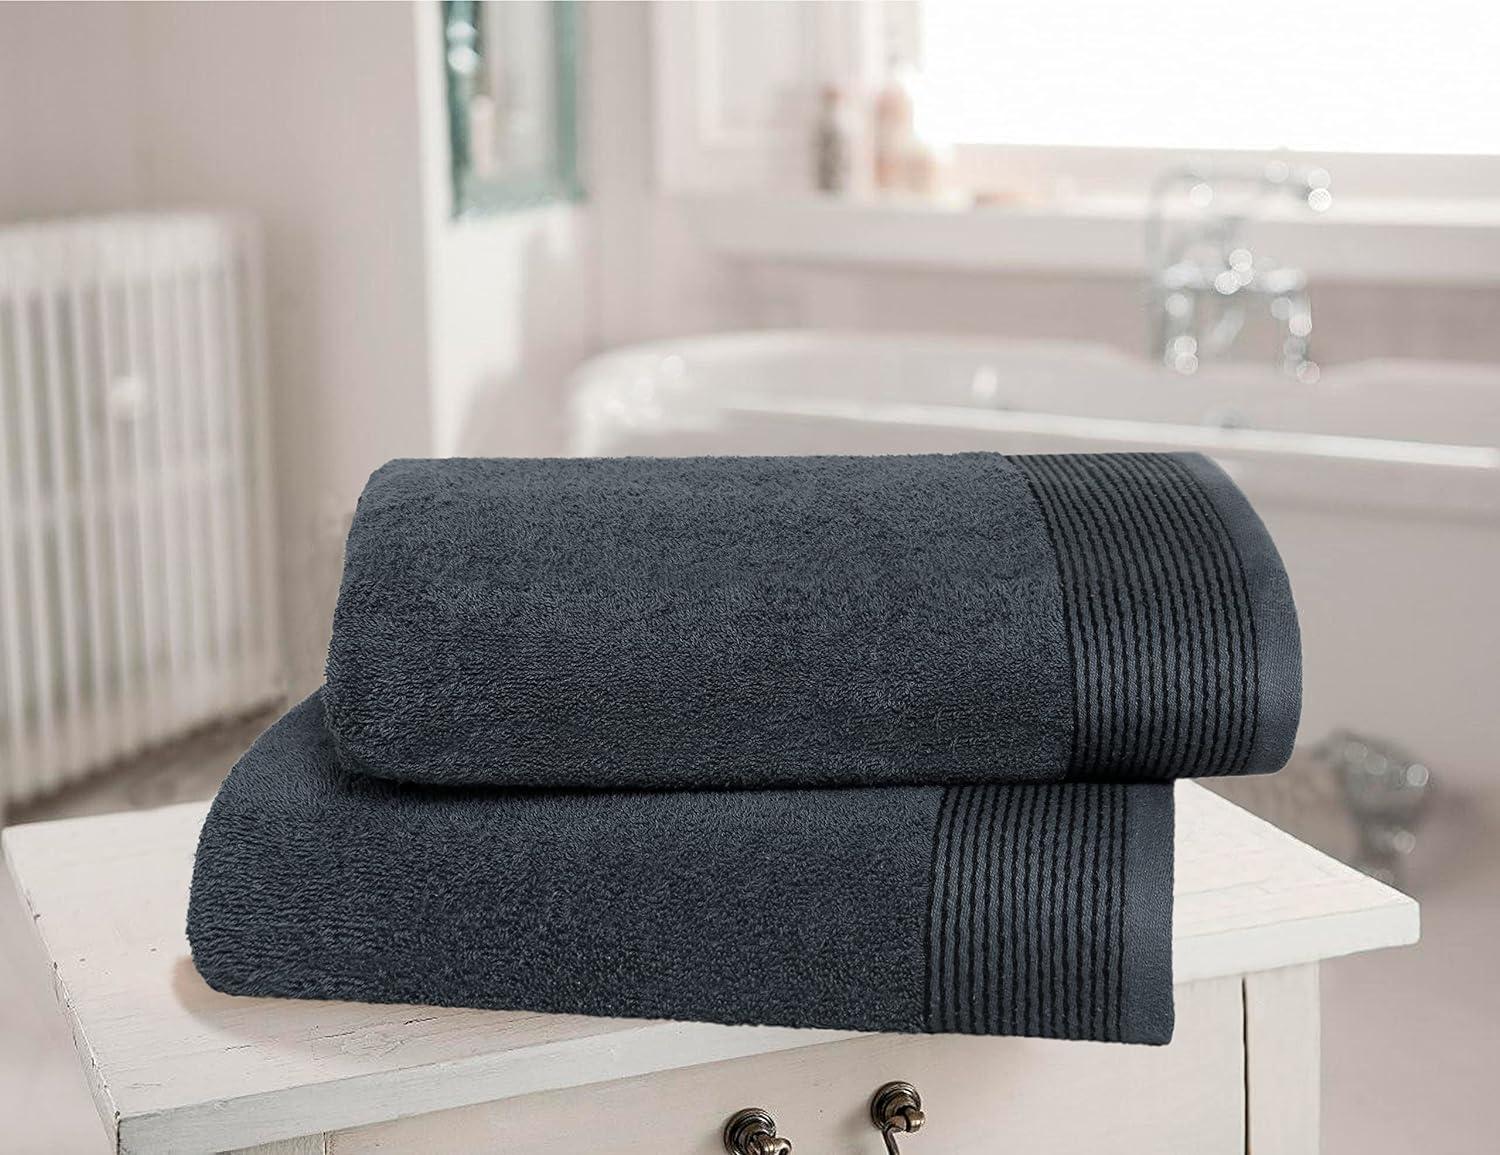 Kitcheniva Ultra Super Soft 100% Cotton Bath Towels Gray 2 Packs, Set of 2  - Harris Teeter